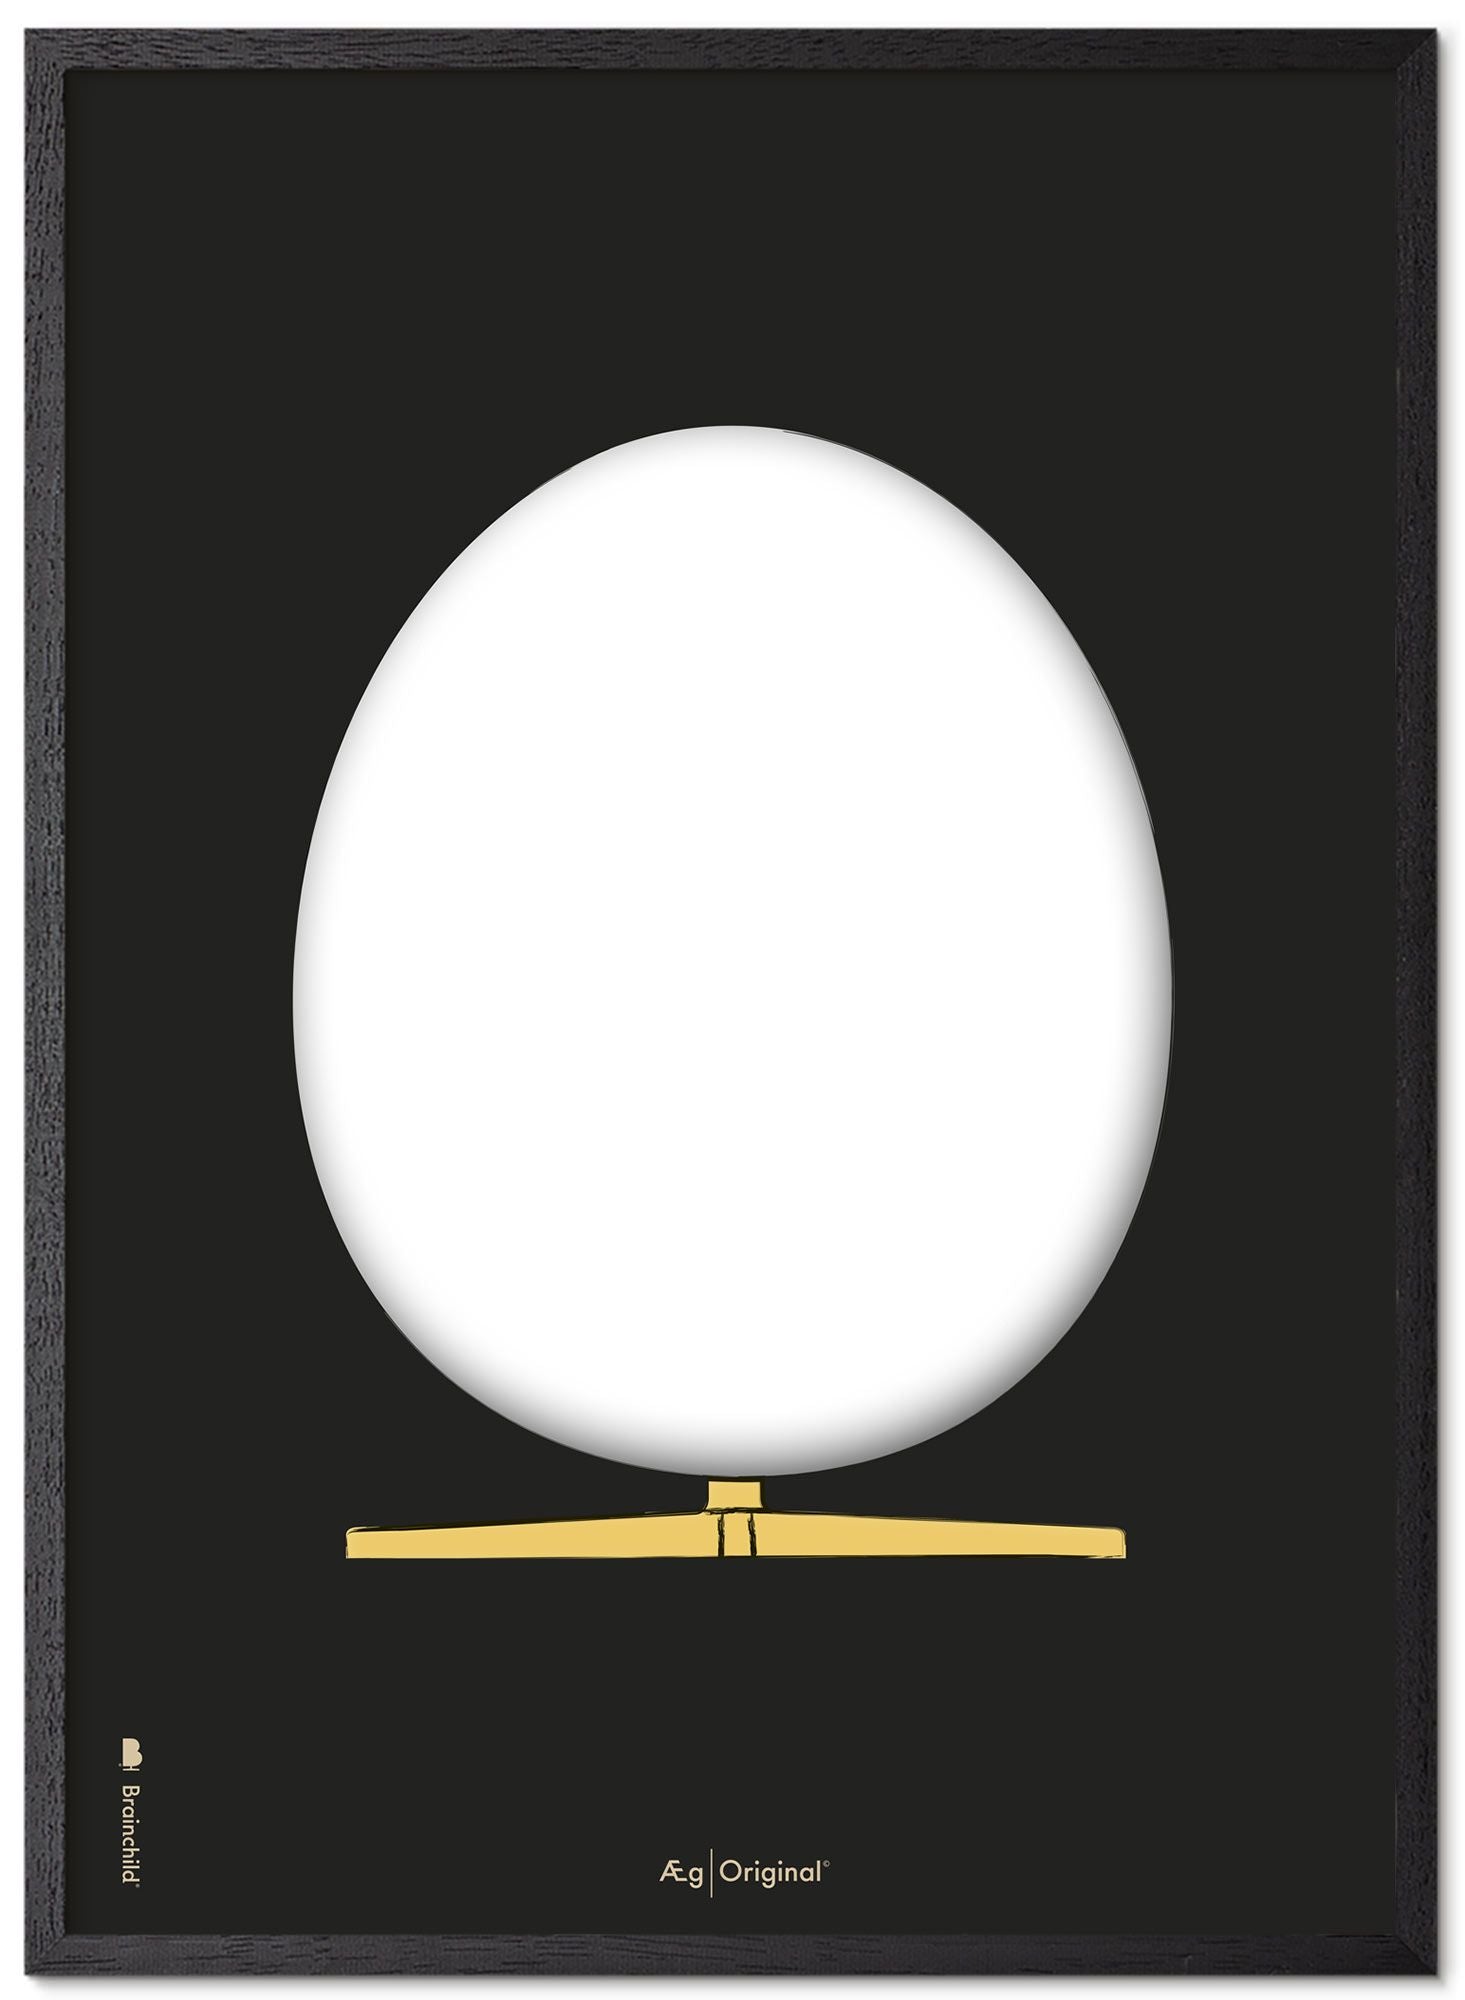 Brainchild The Egg Design Sketch Poster Frame Made Of Black Lacquered Wood 70x100 Cm, Black Background